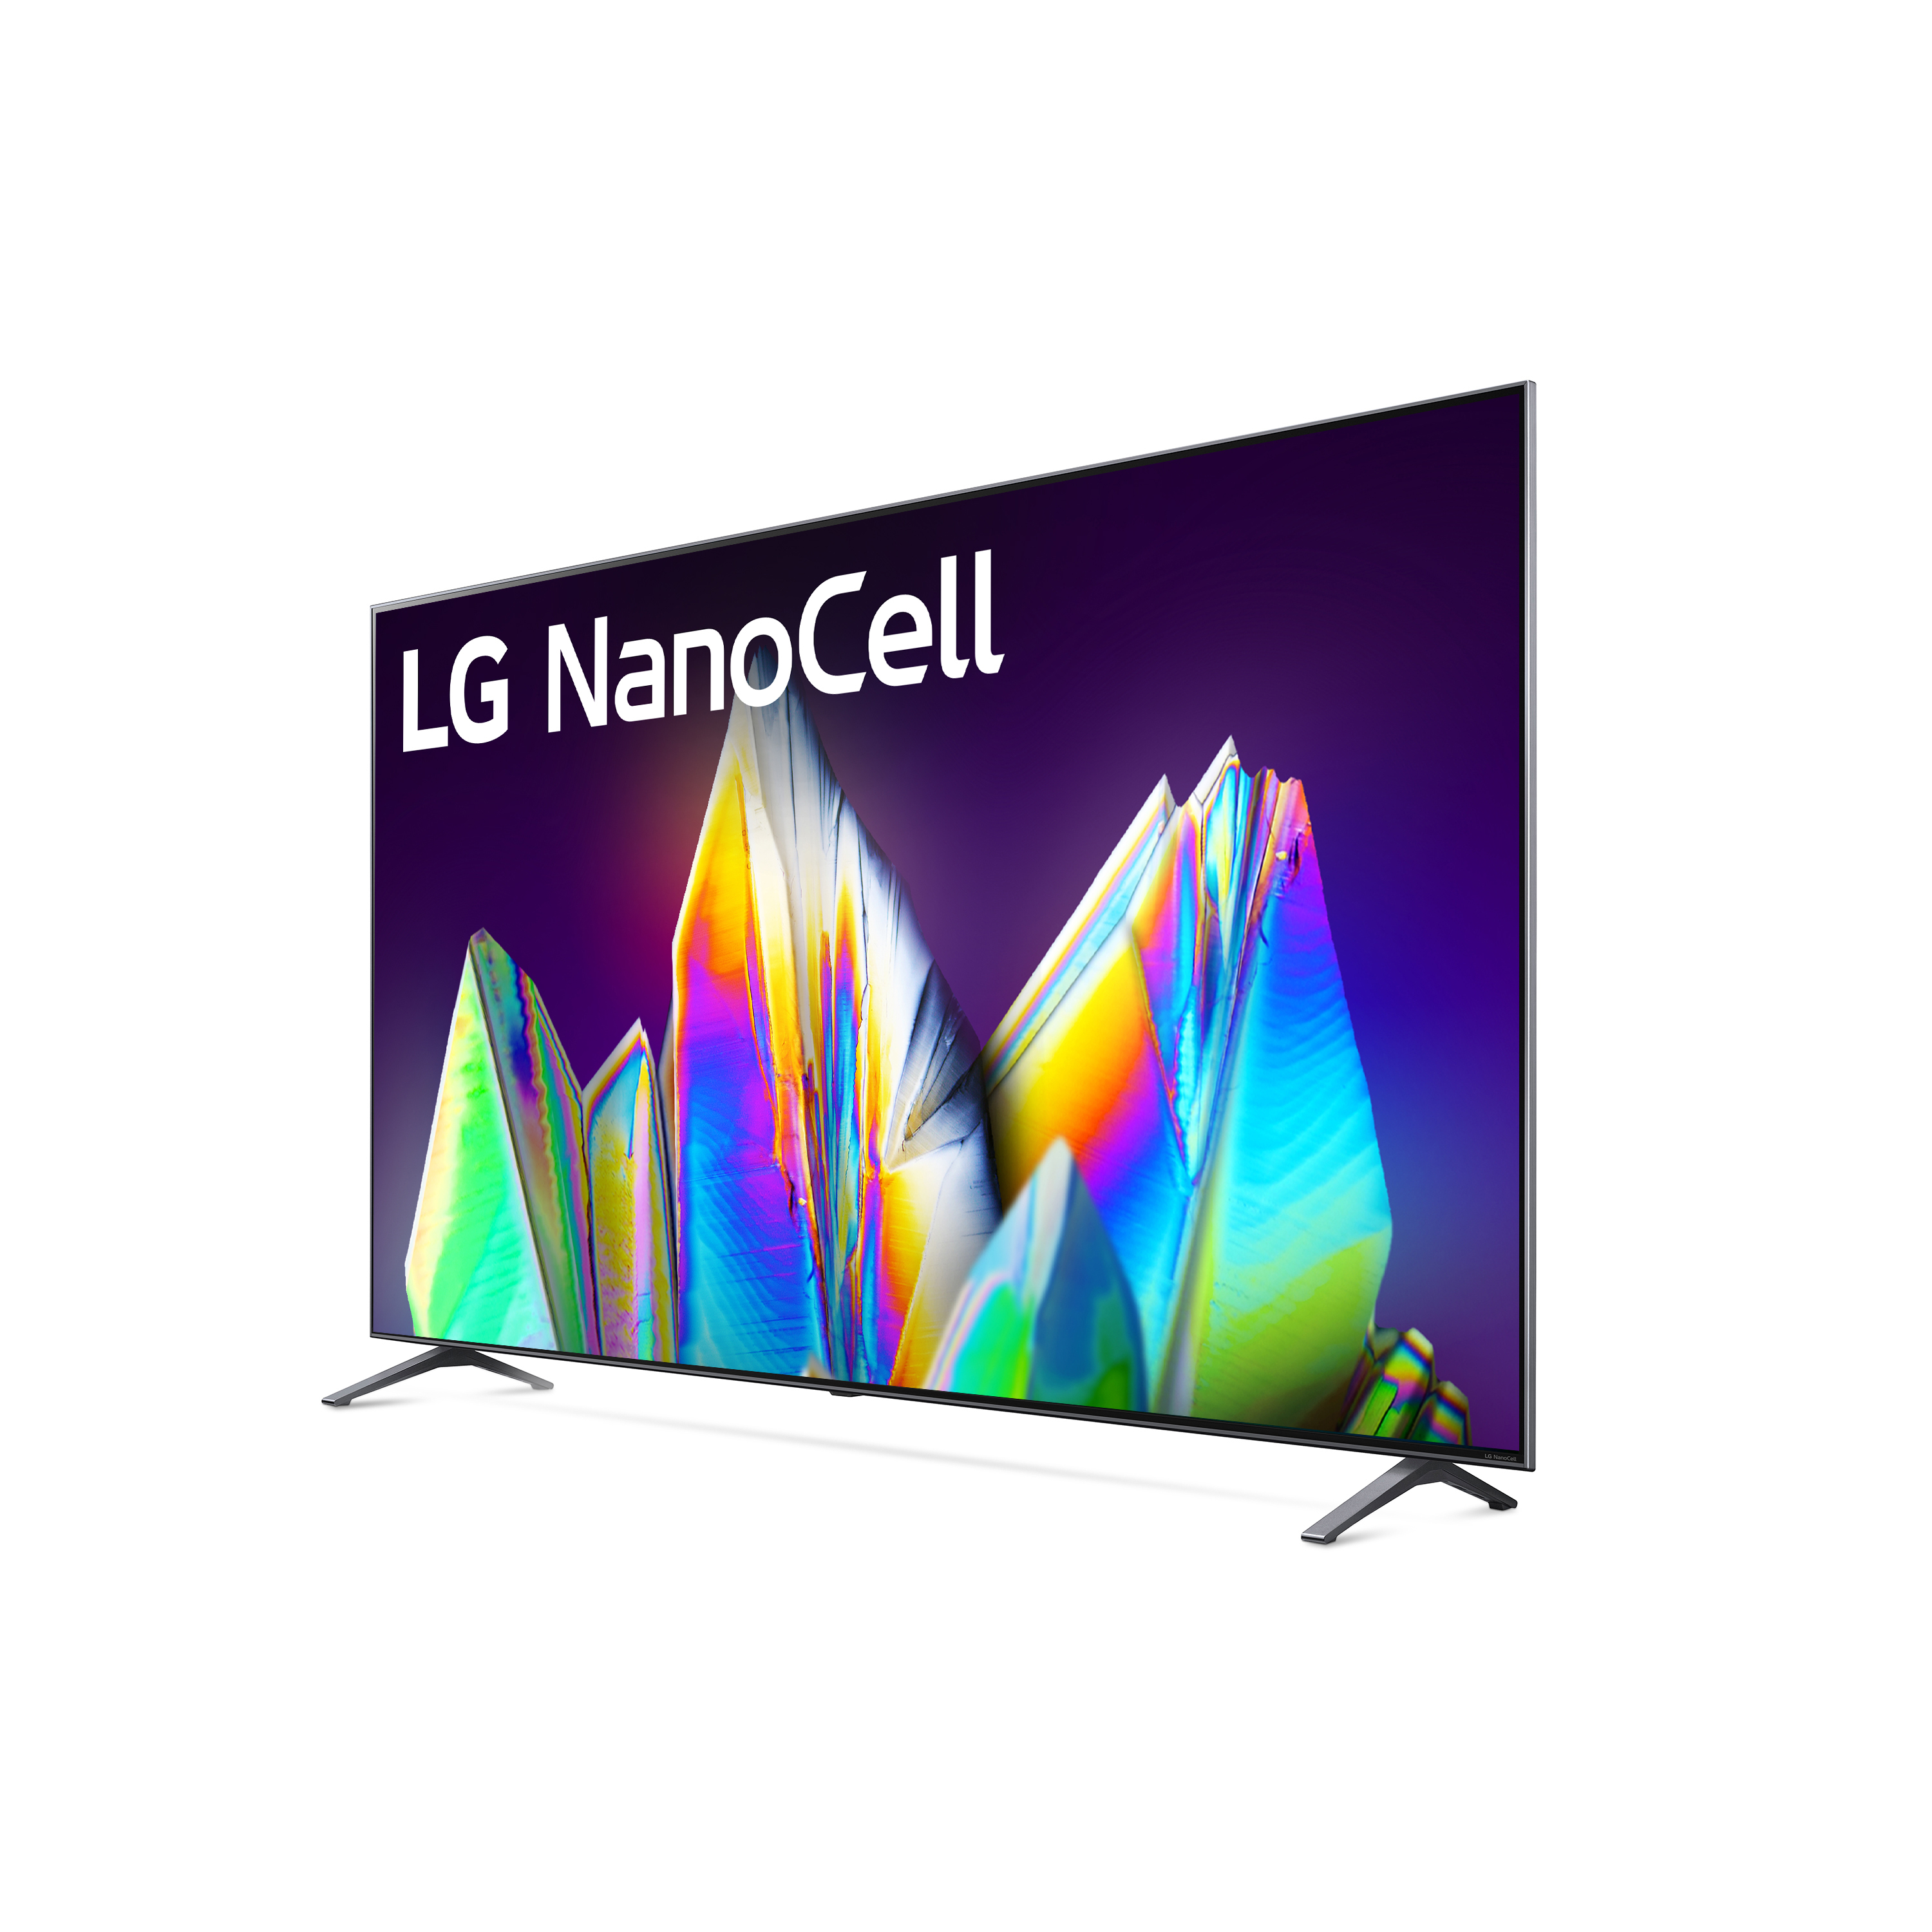 LG 75" Class 8K UHD 4320P NanoCell Smart TV with HDR 75NANO99UNA 2020 Model - image 26 of 39